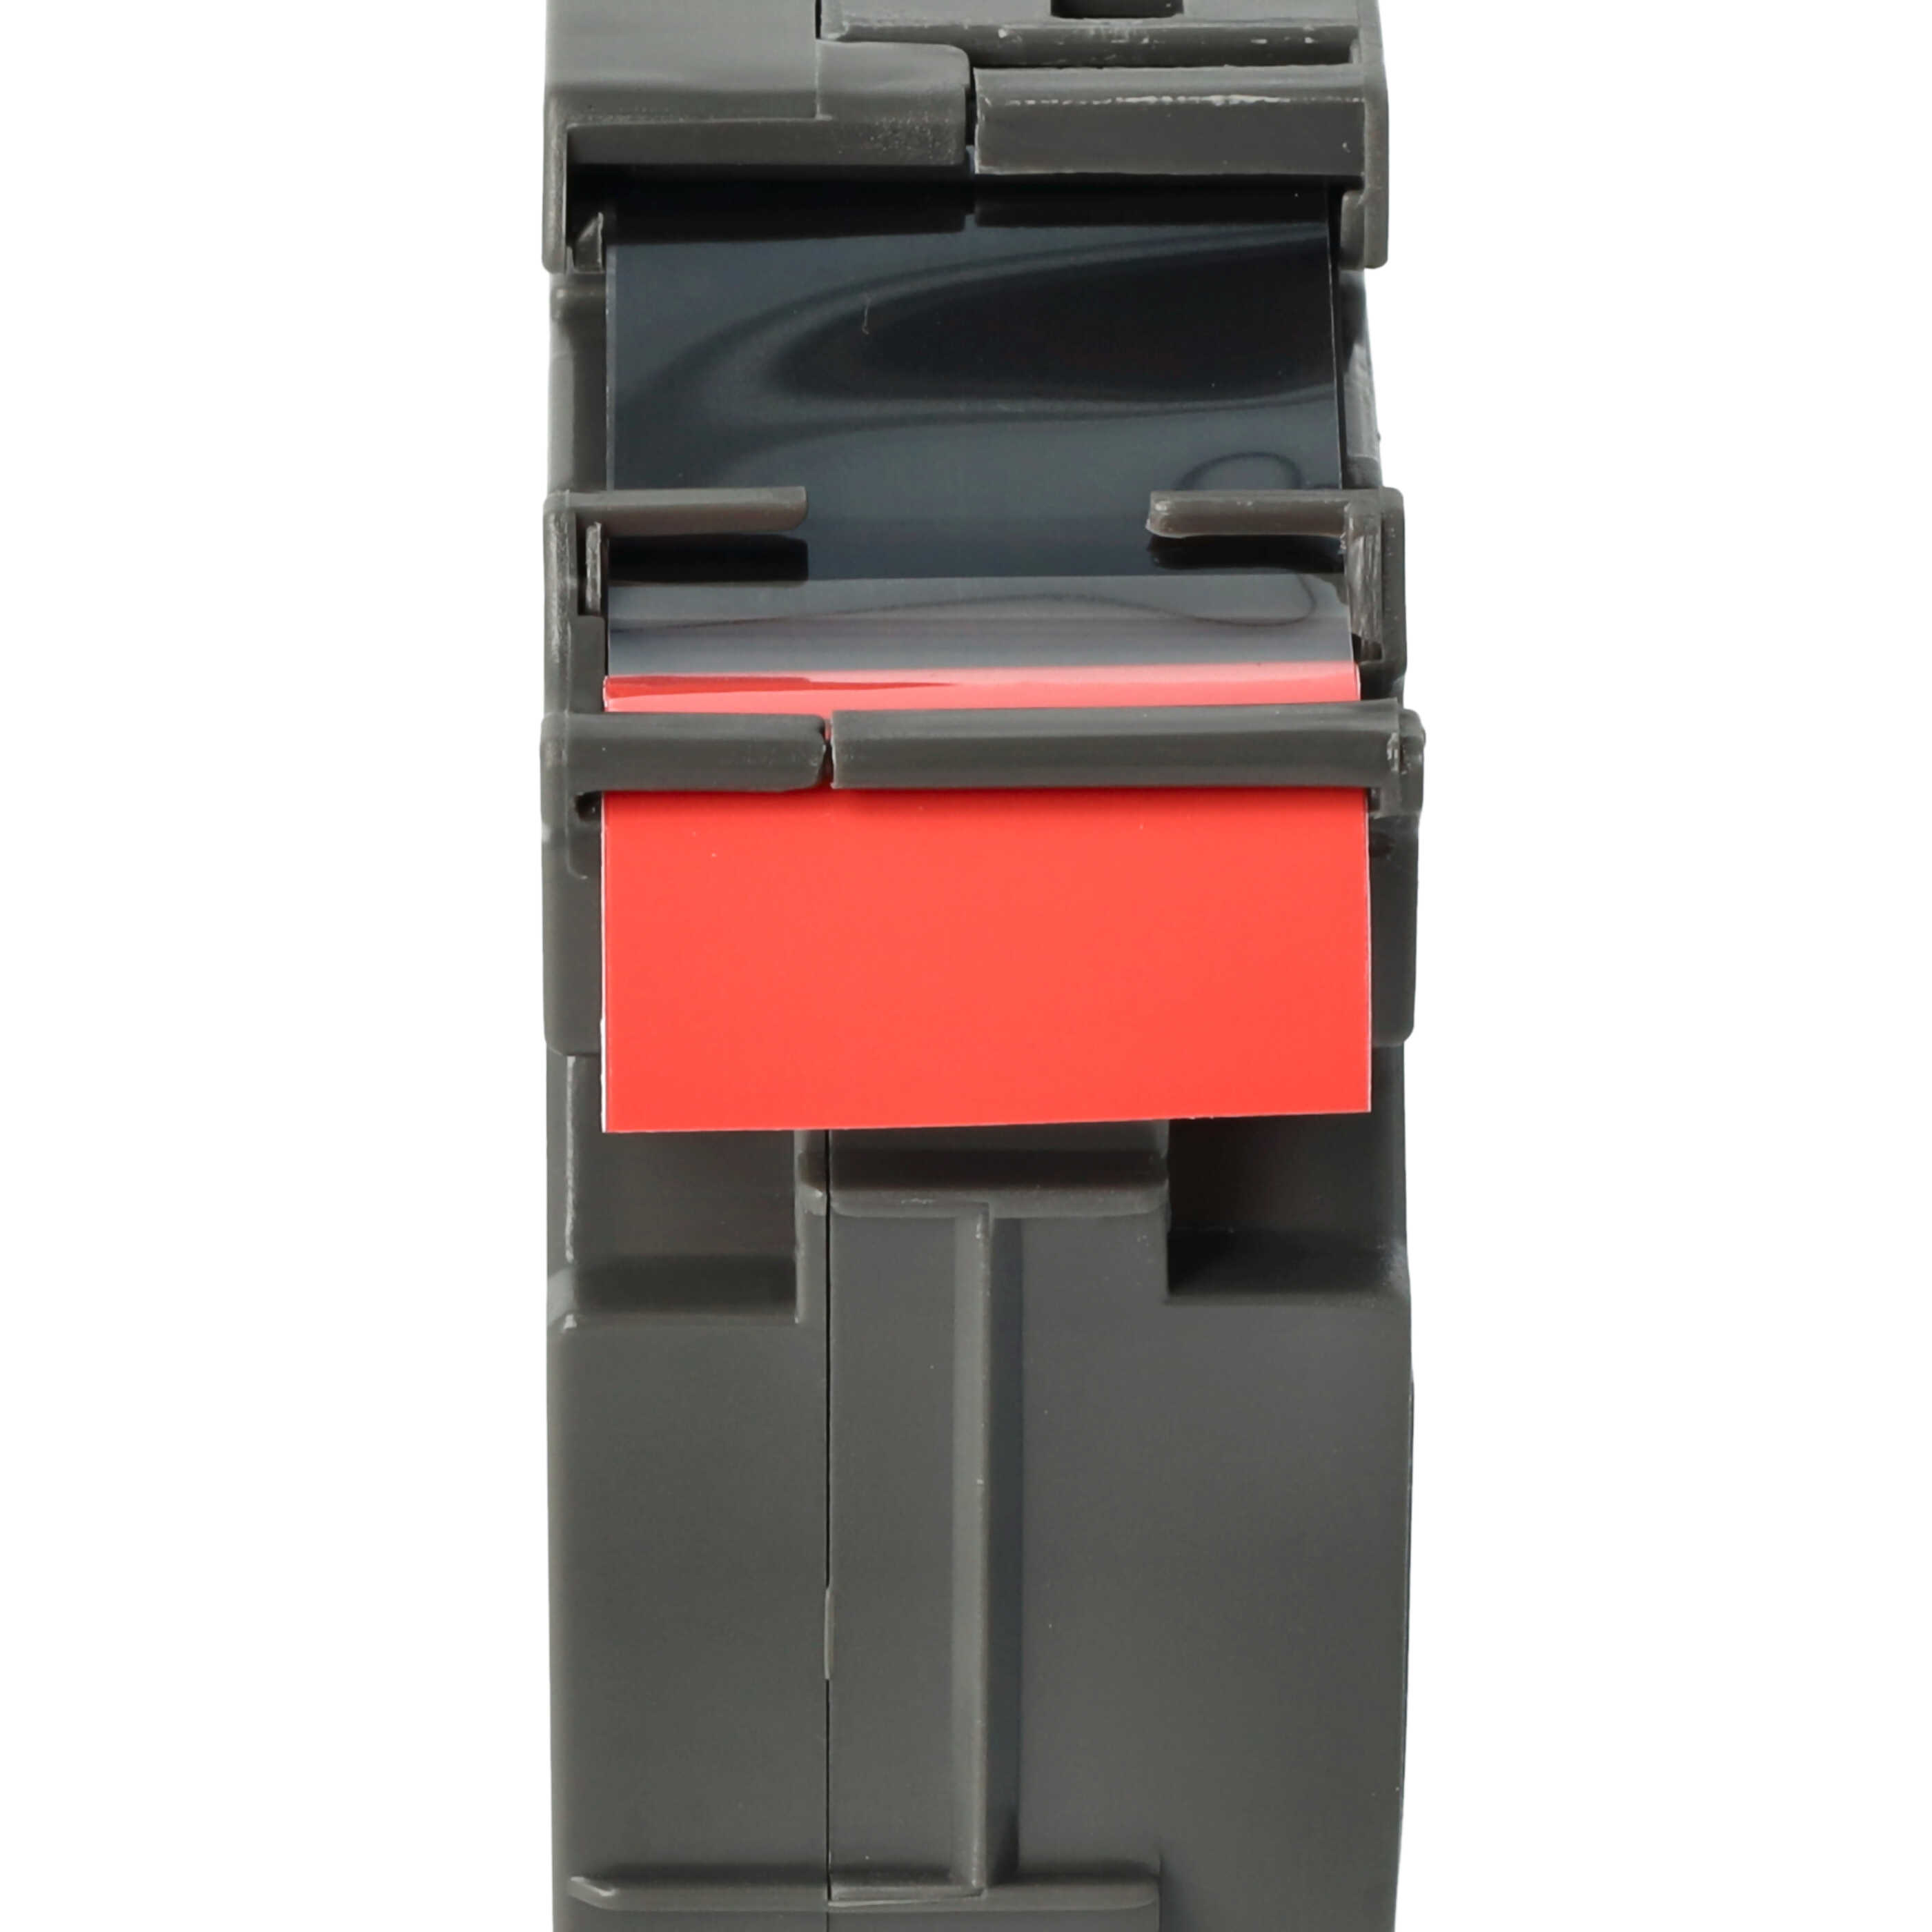 Casete cinta escritura reemplaza Brother TZE-S451 Negro su Rojo